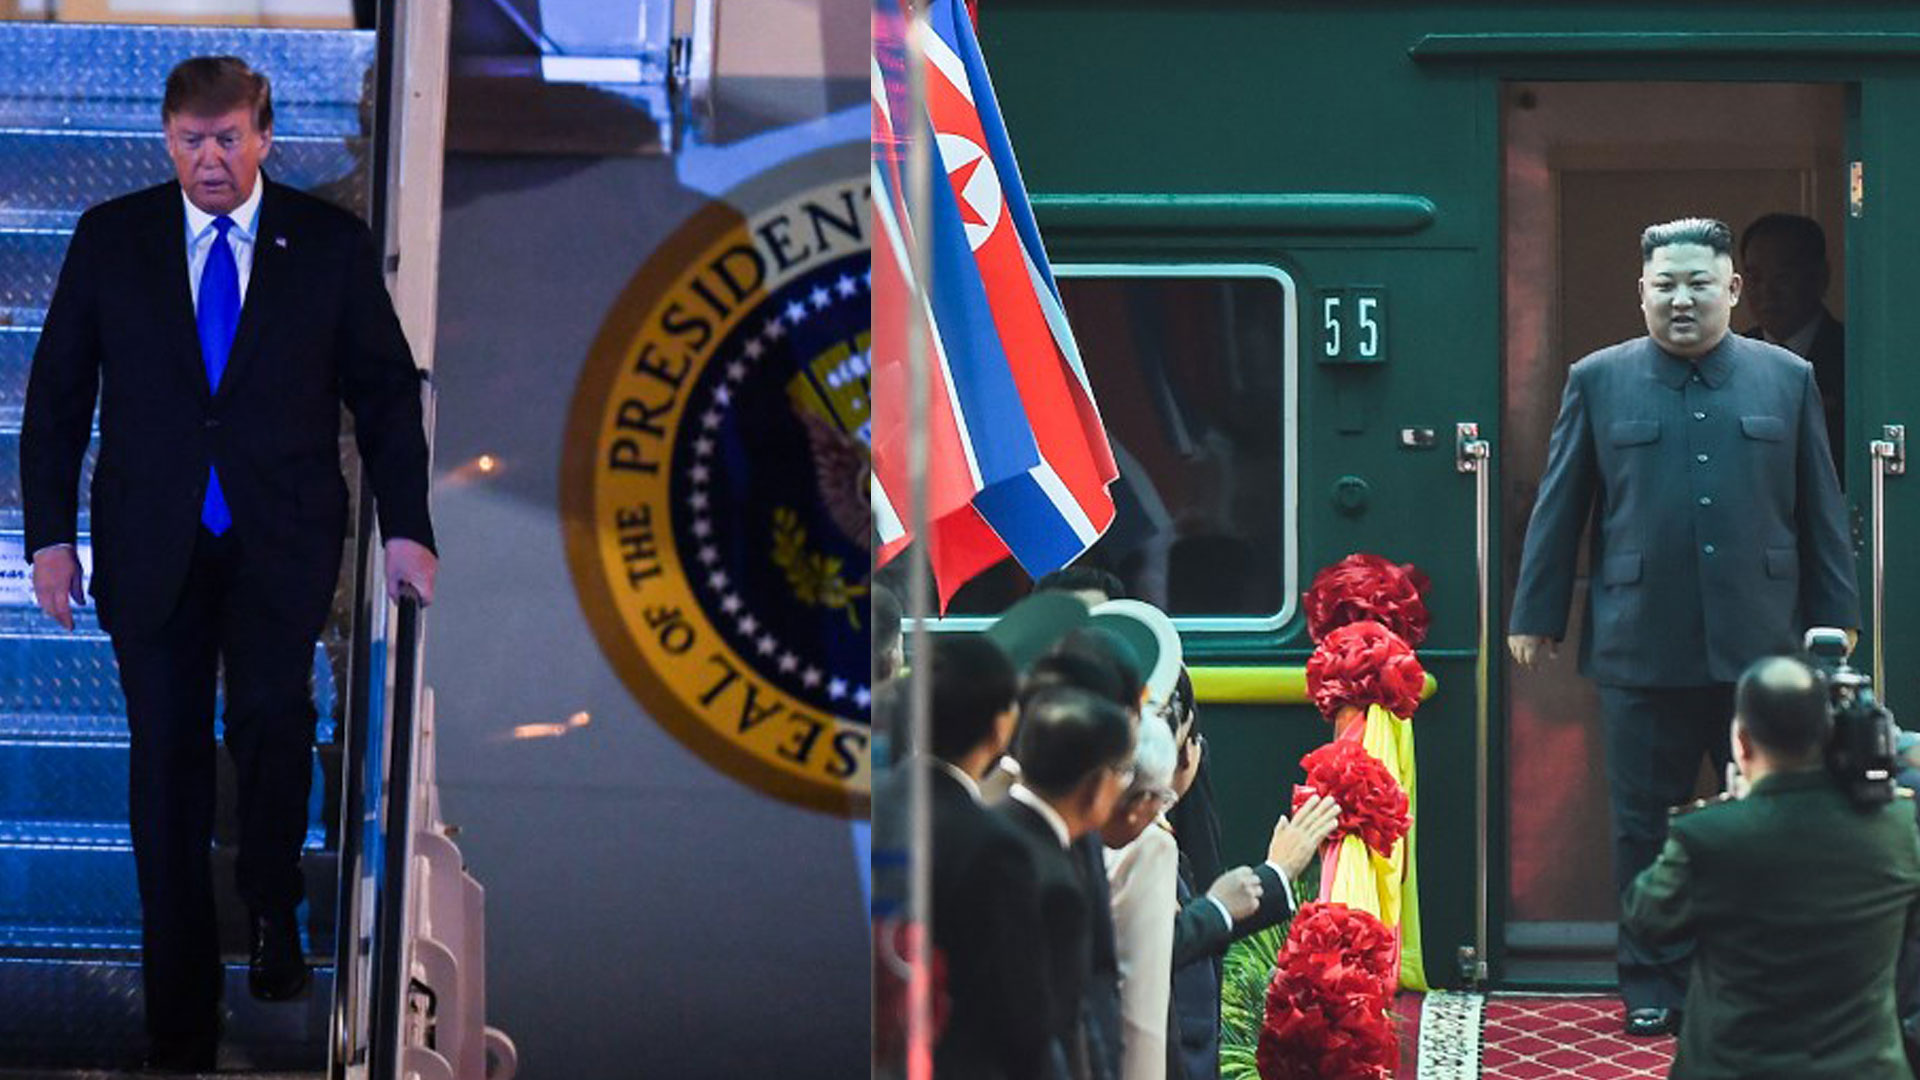 Trump, Kim arrive in Hanoi for second summit on nuclear talks